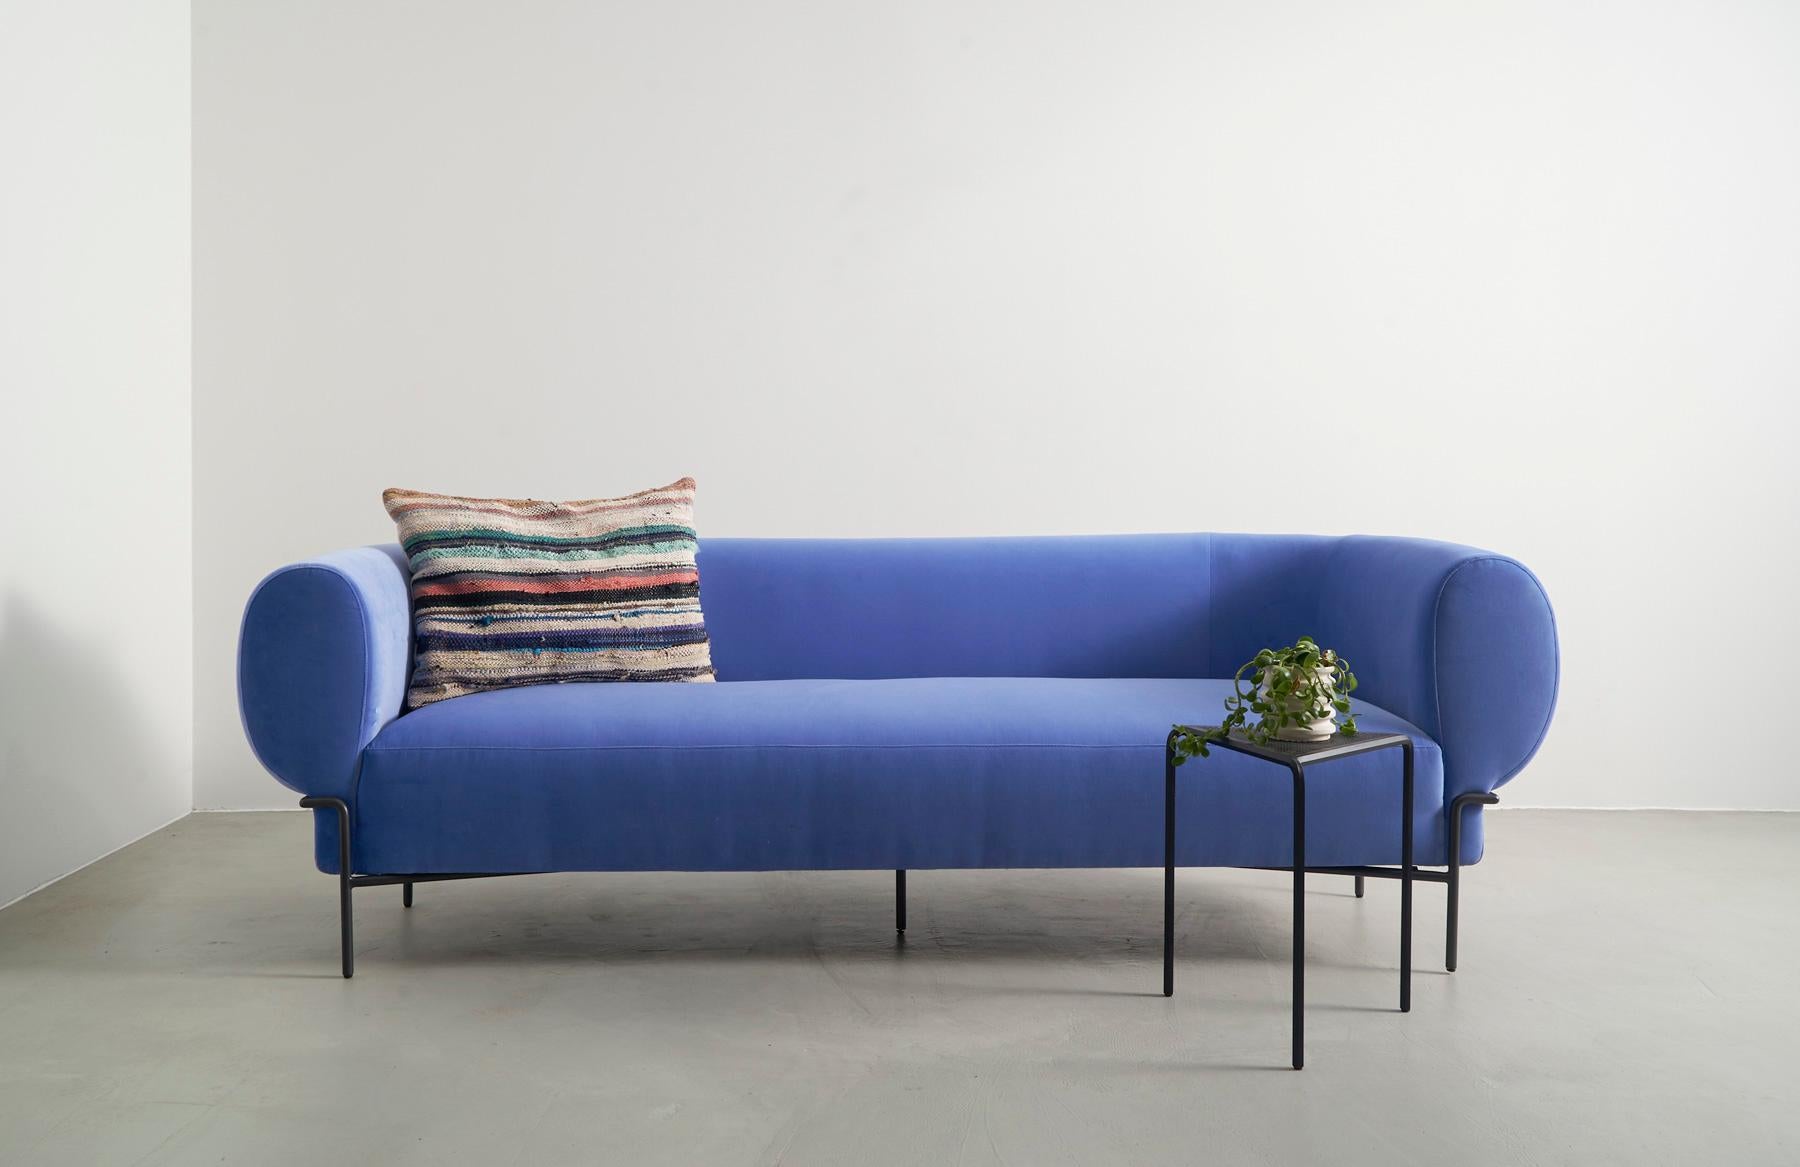 North American Contemporary Cornflower Blue Velvet Modern Sofa with Black Metal Base